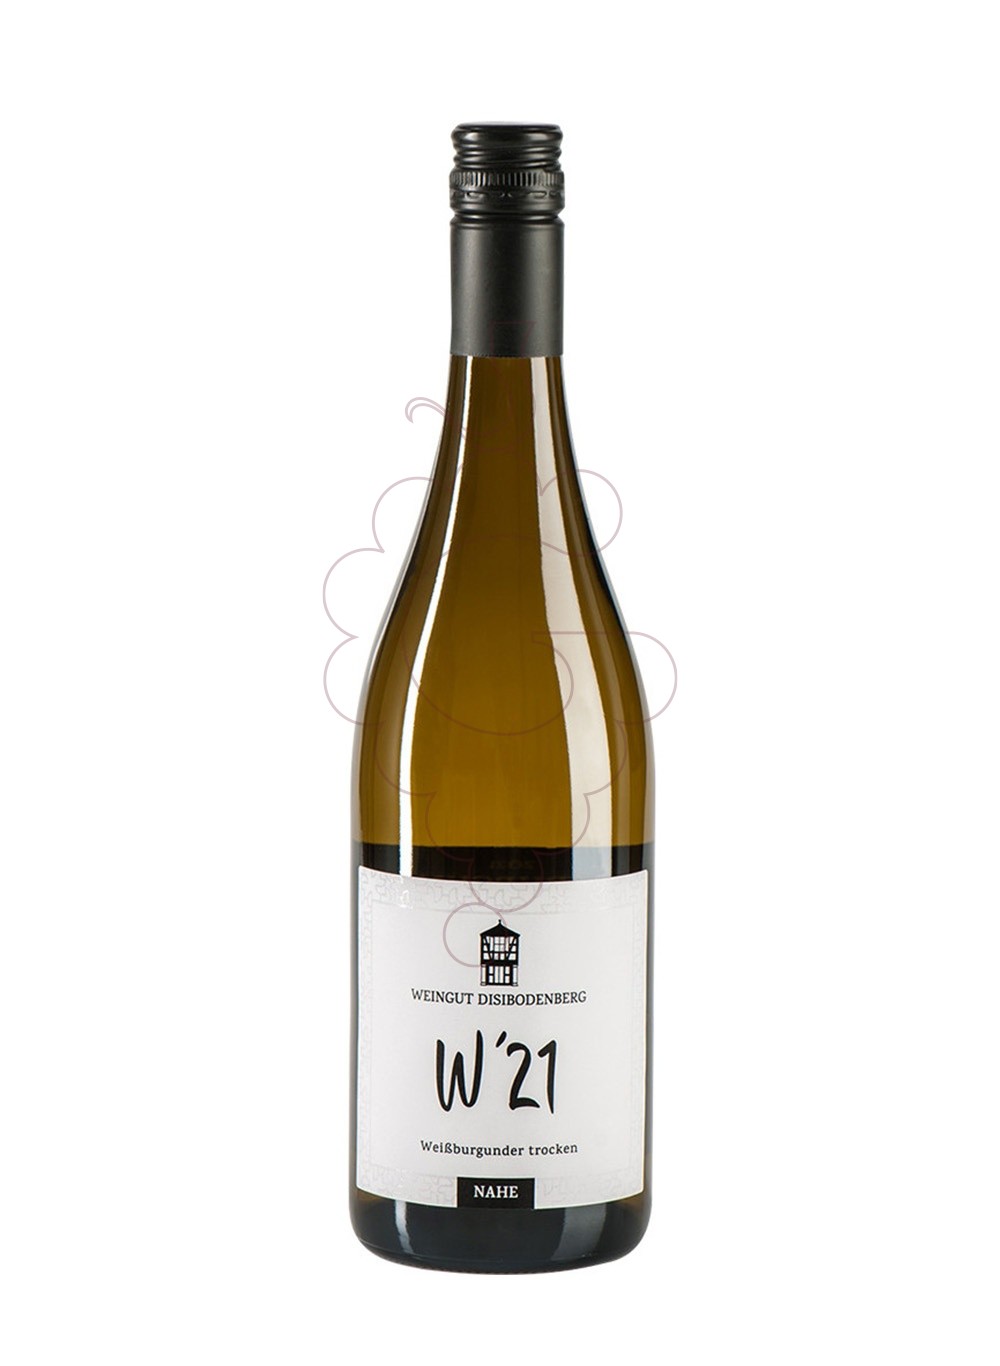 Photo Disibodenberg Weissburgunder white wine